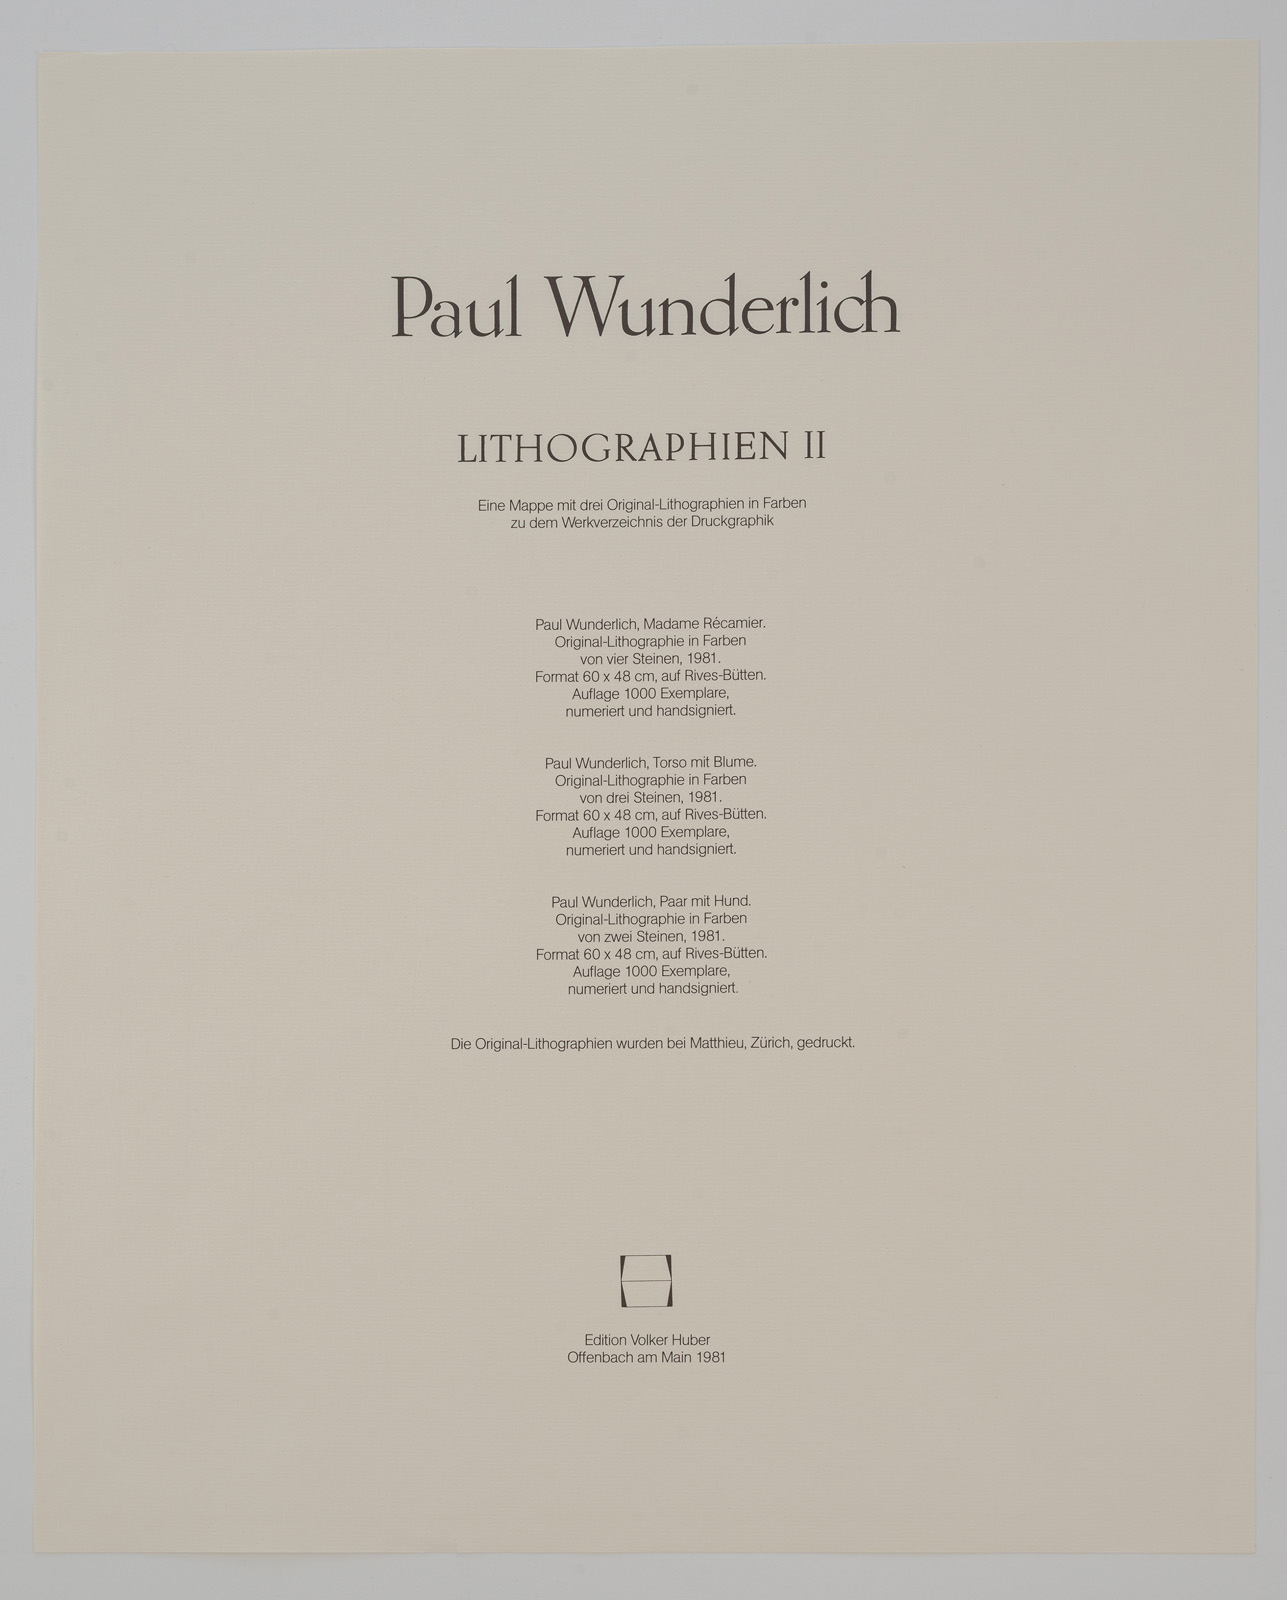 Wunderlich, Paul - Image 9 of 9